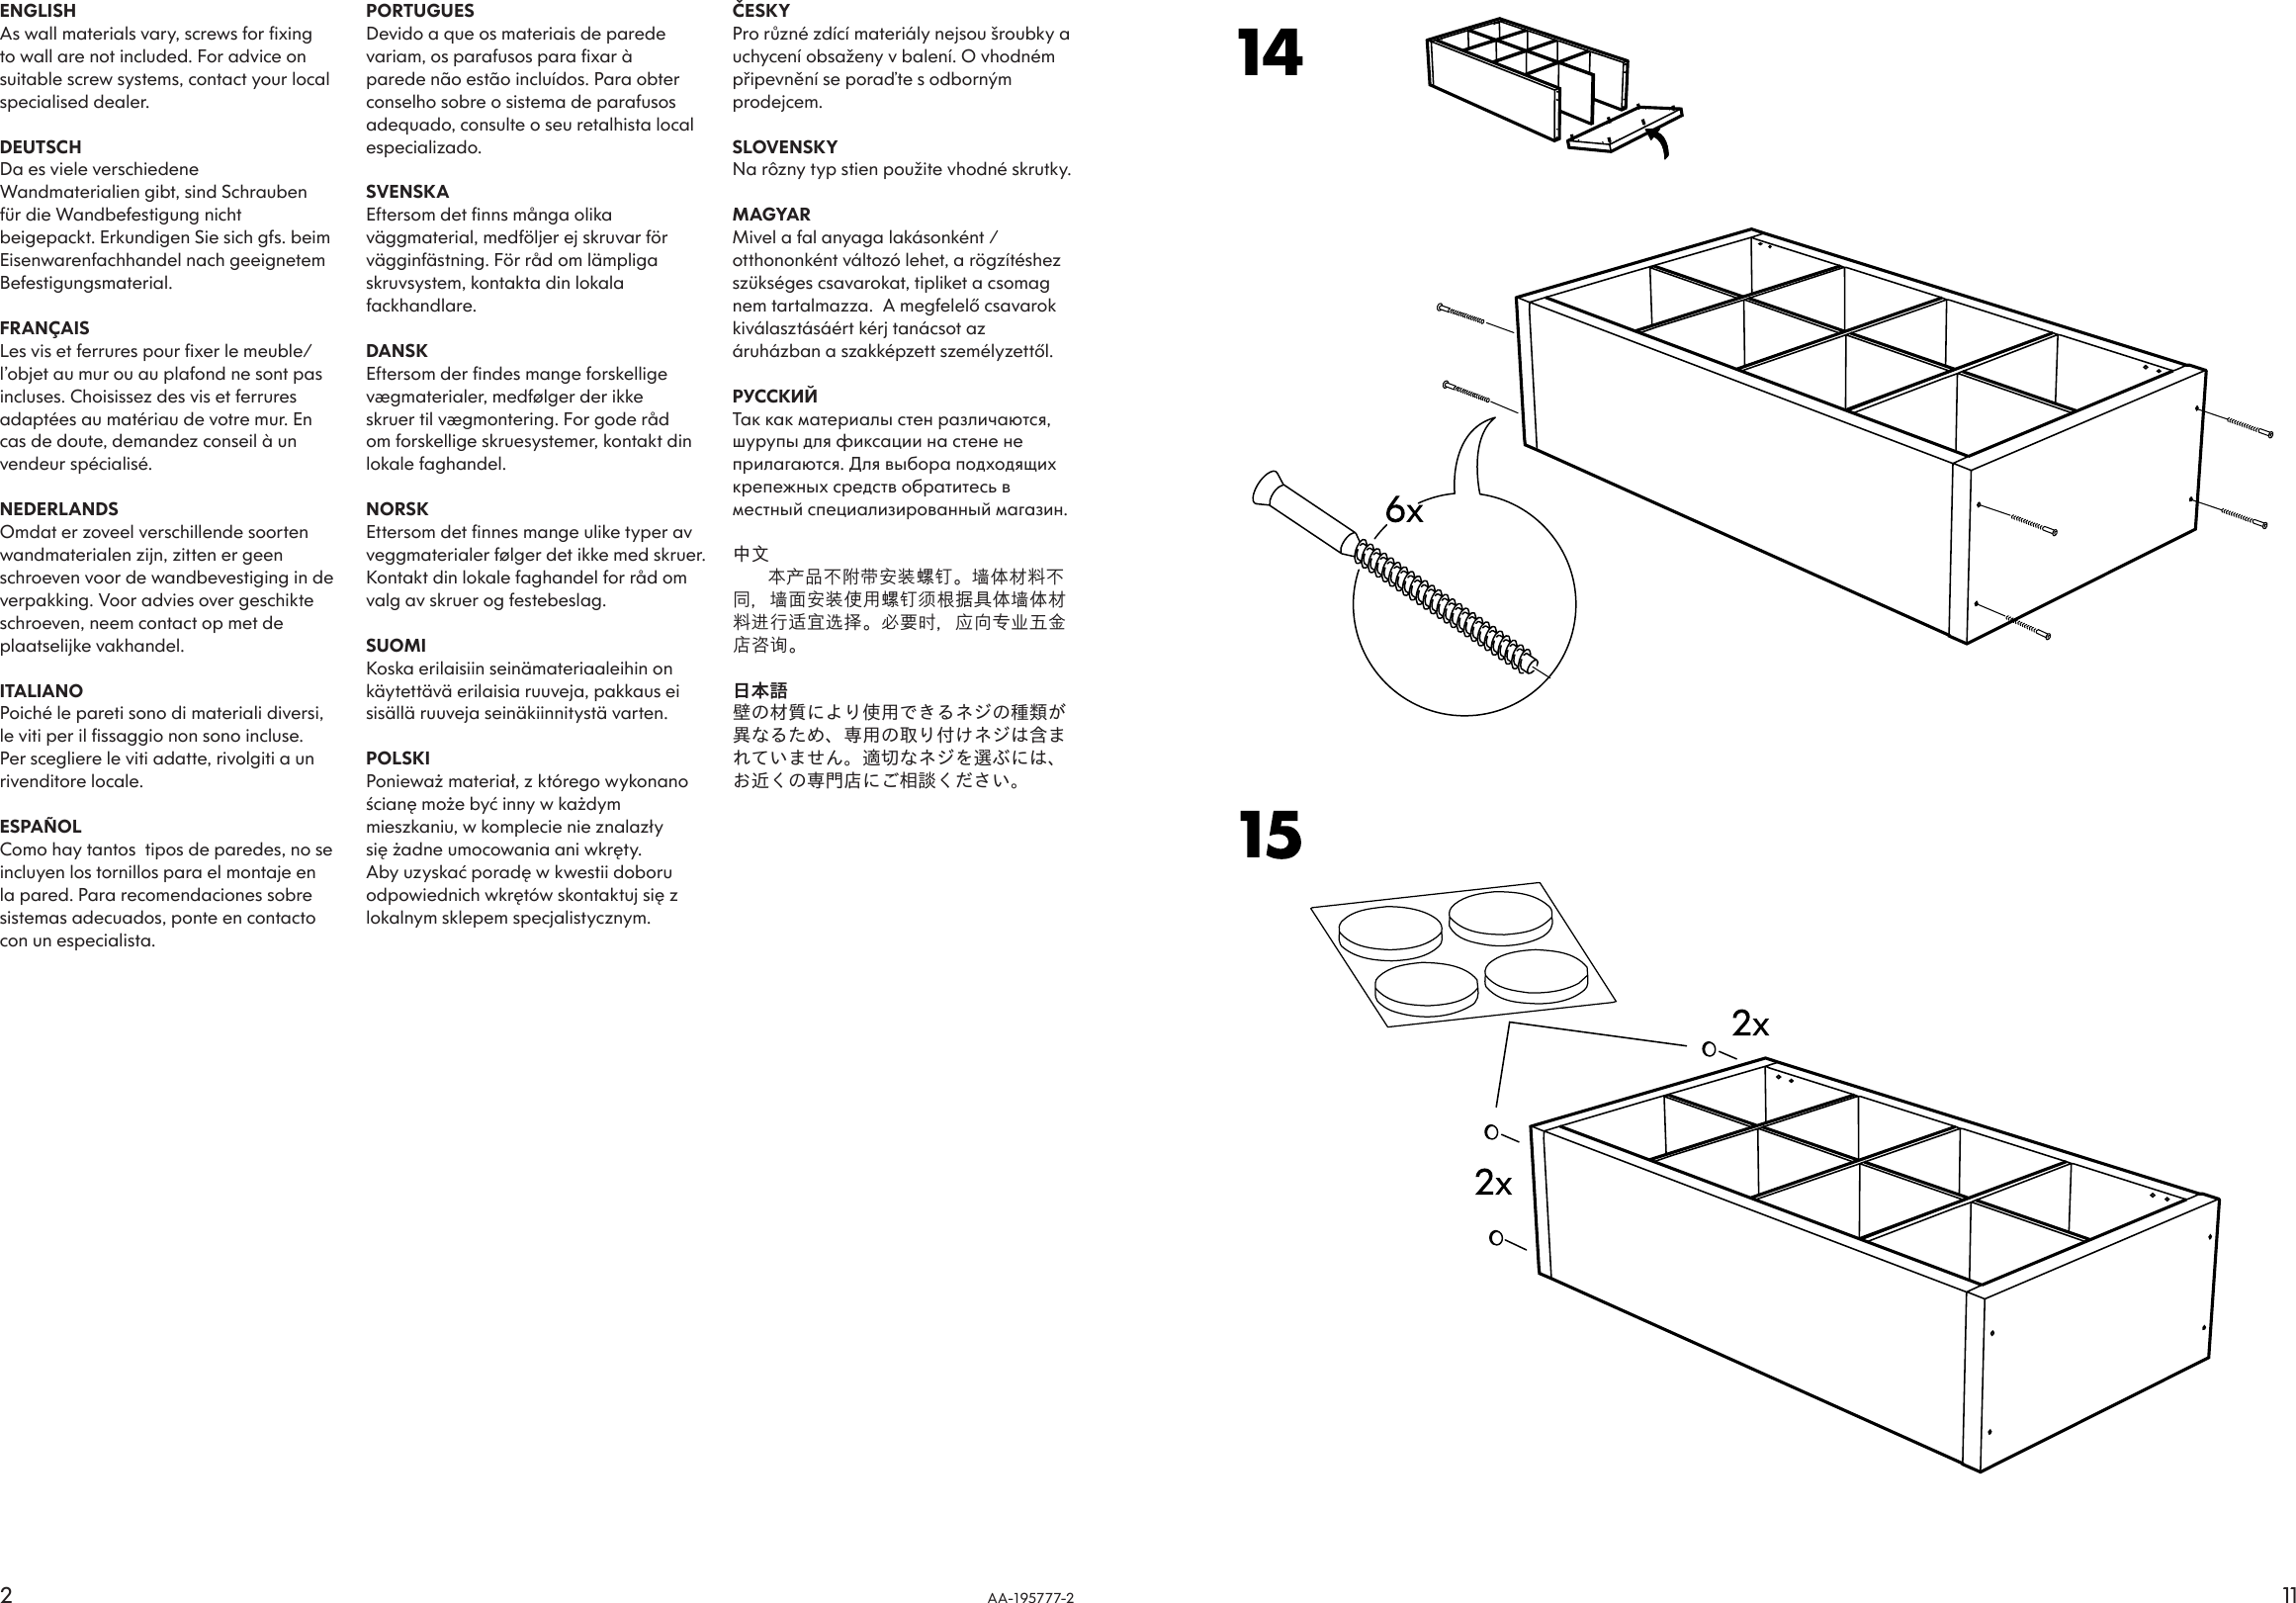 Ikea Expedit Bookcase 58 5 8x31 1 8, Ikea Cube Bookcase Instructions